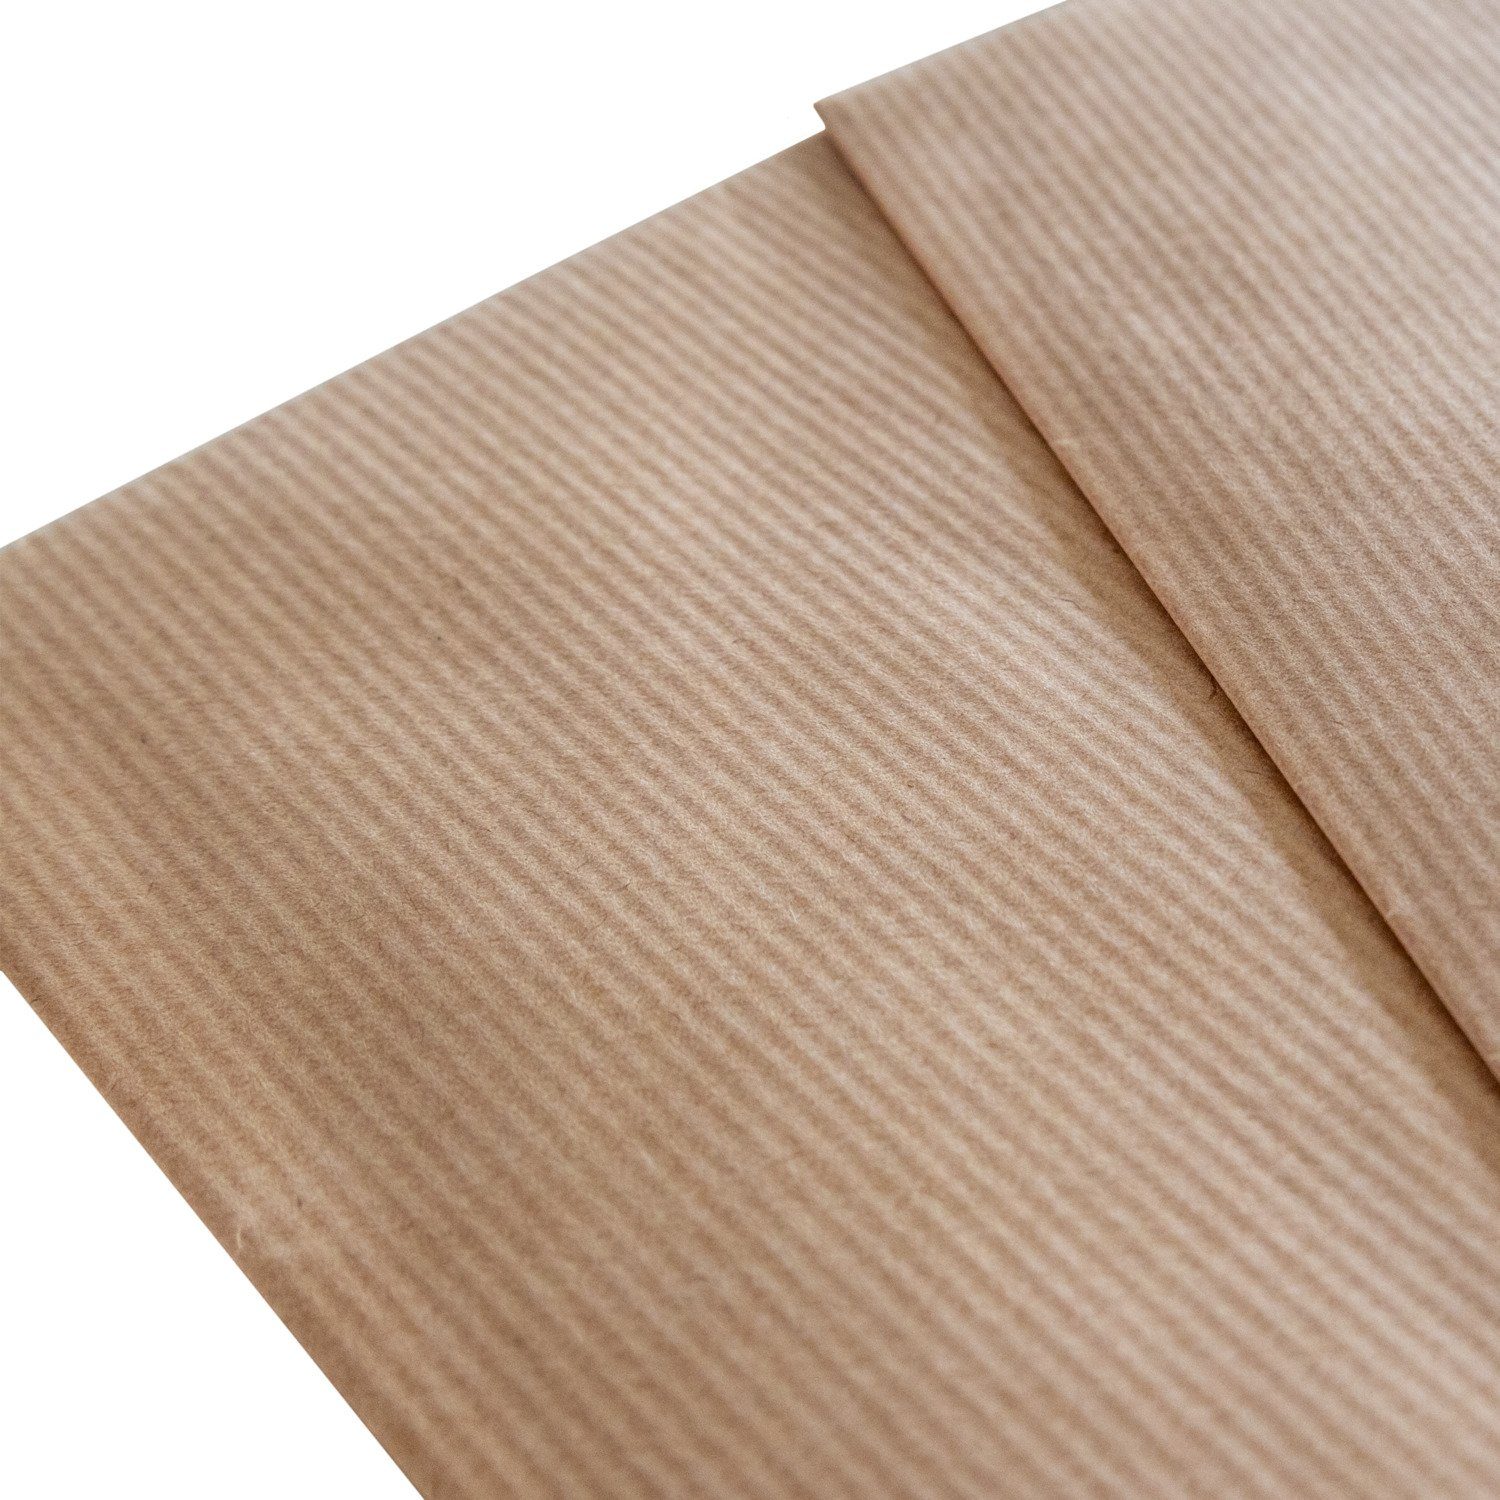 2 Packpapier - Idena Papier starkes Bogen, cm, 50059 70x100 Packpapier 60g/m² Idena